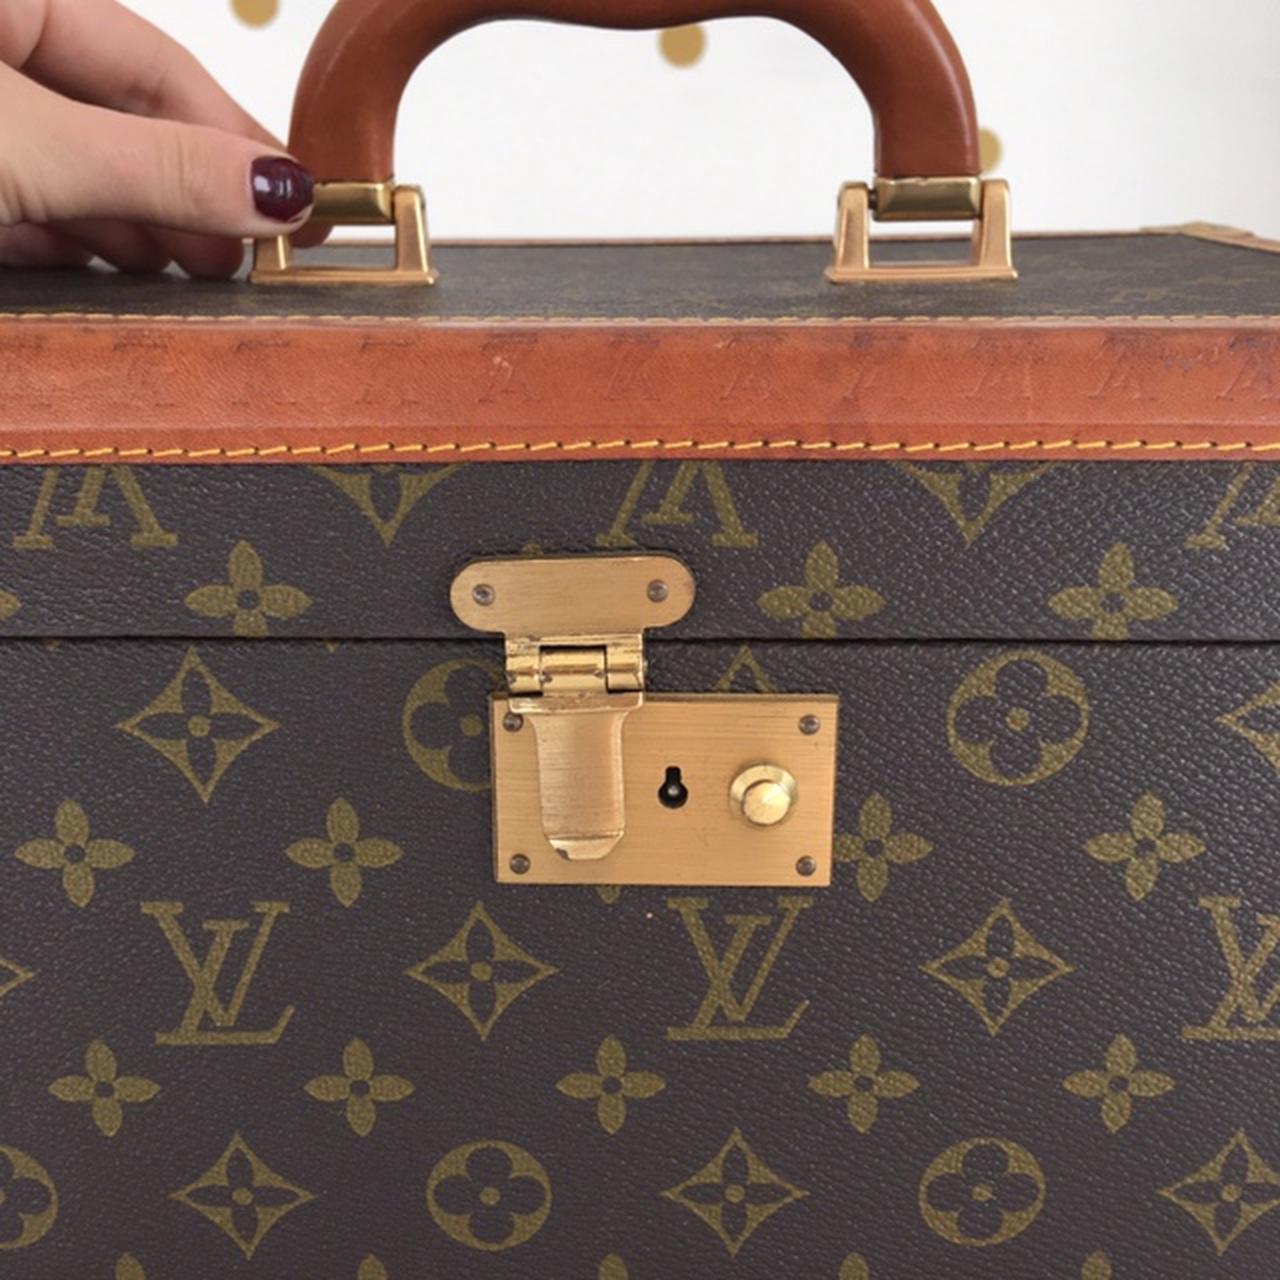 Vintage Louis Vuitton Vanity Case Greece, SAVE 45% 